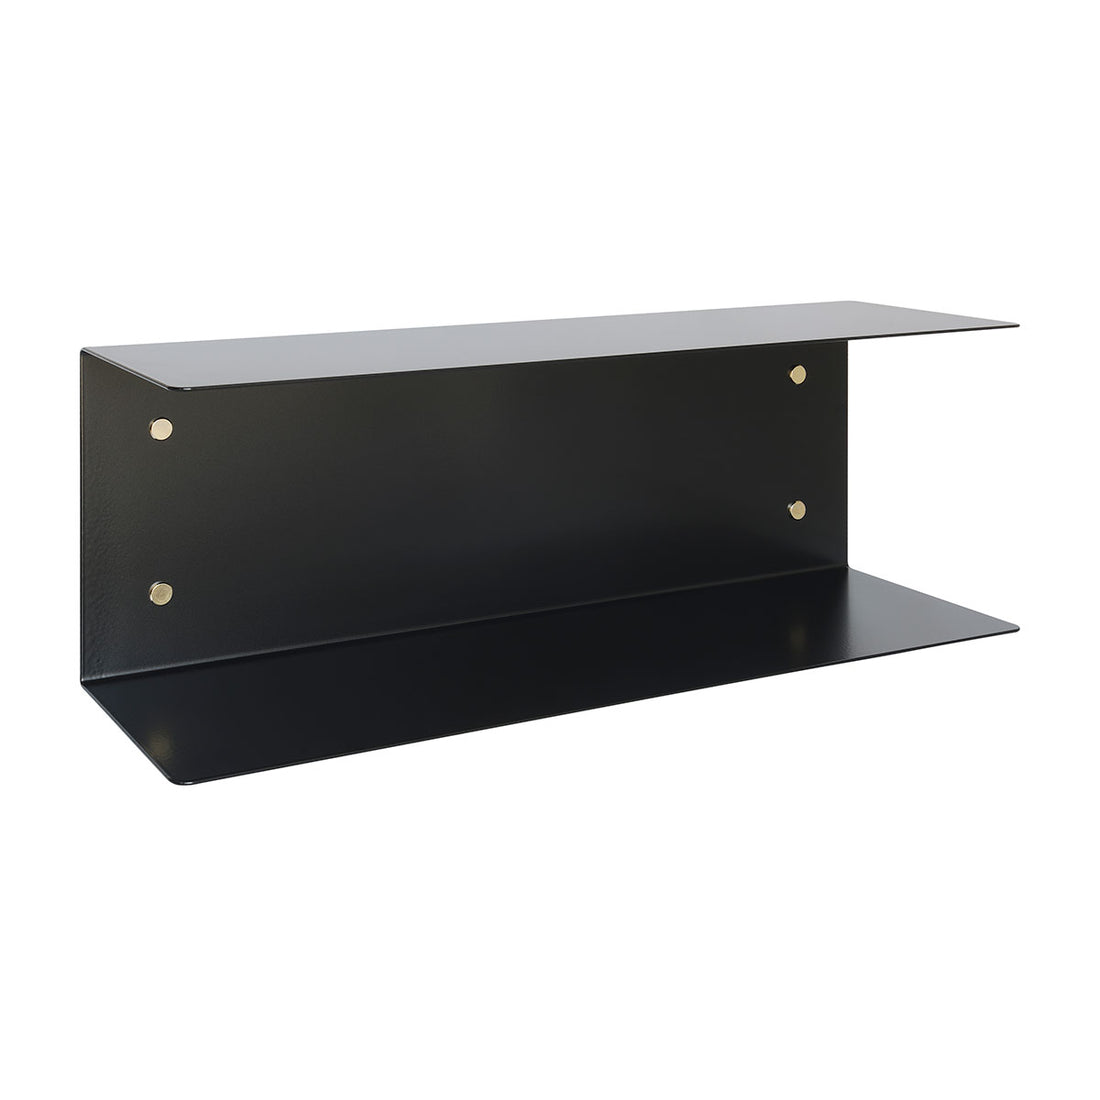 Detail metal shelf in black - 60 cm